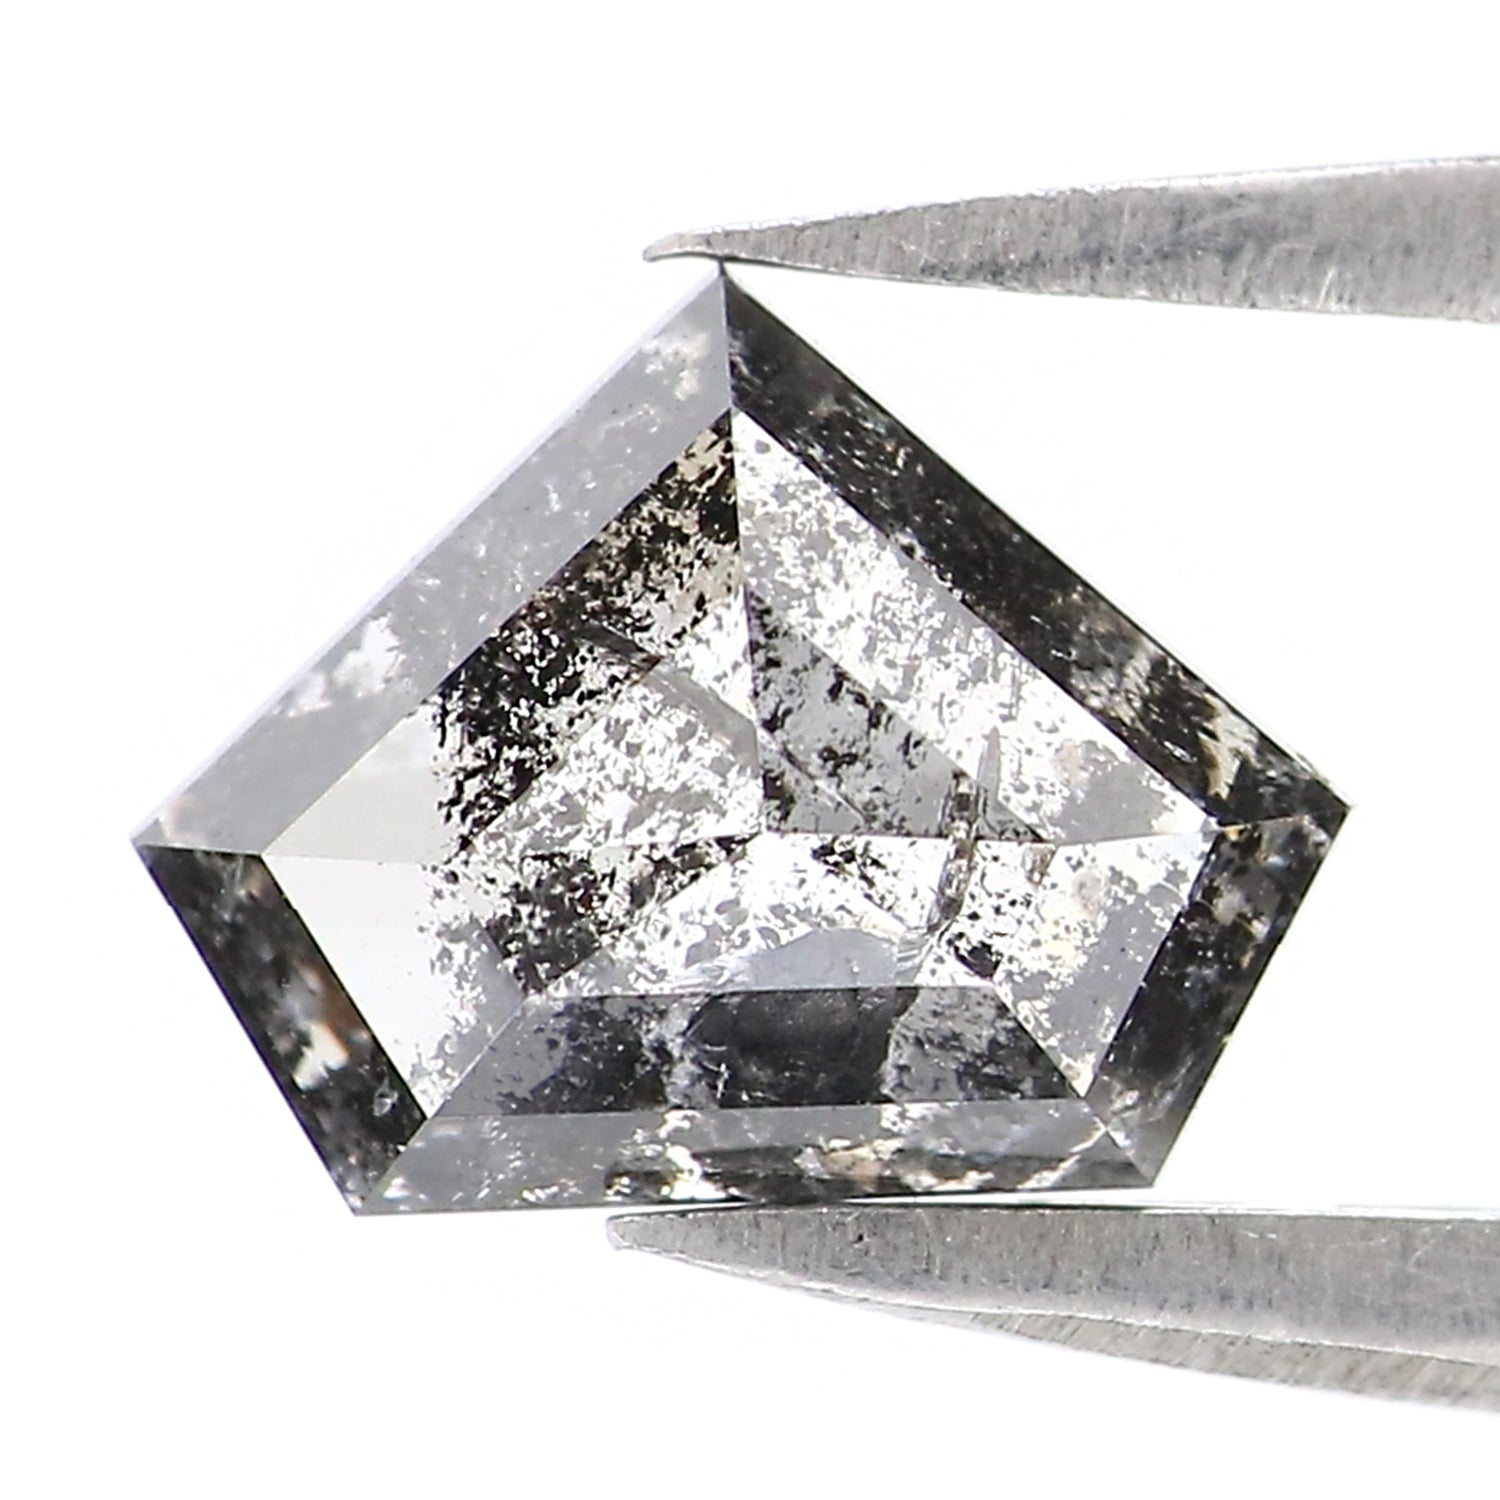 1.27 CT Natural Loose Shield Shape Diamond Salt And Pepper Shield Diamond 6.50 MM Natural Loose Black Color Shield Rose Cut Diamond QL2932